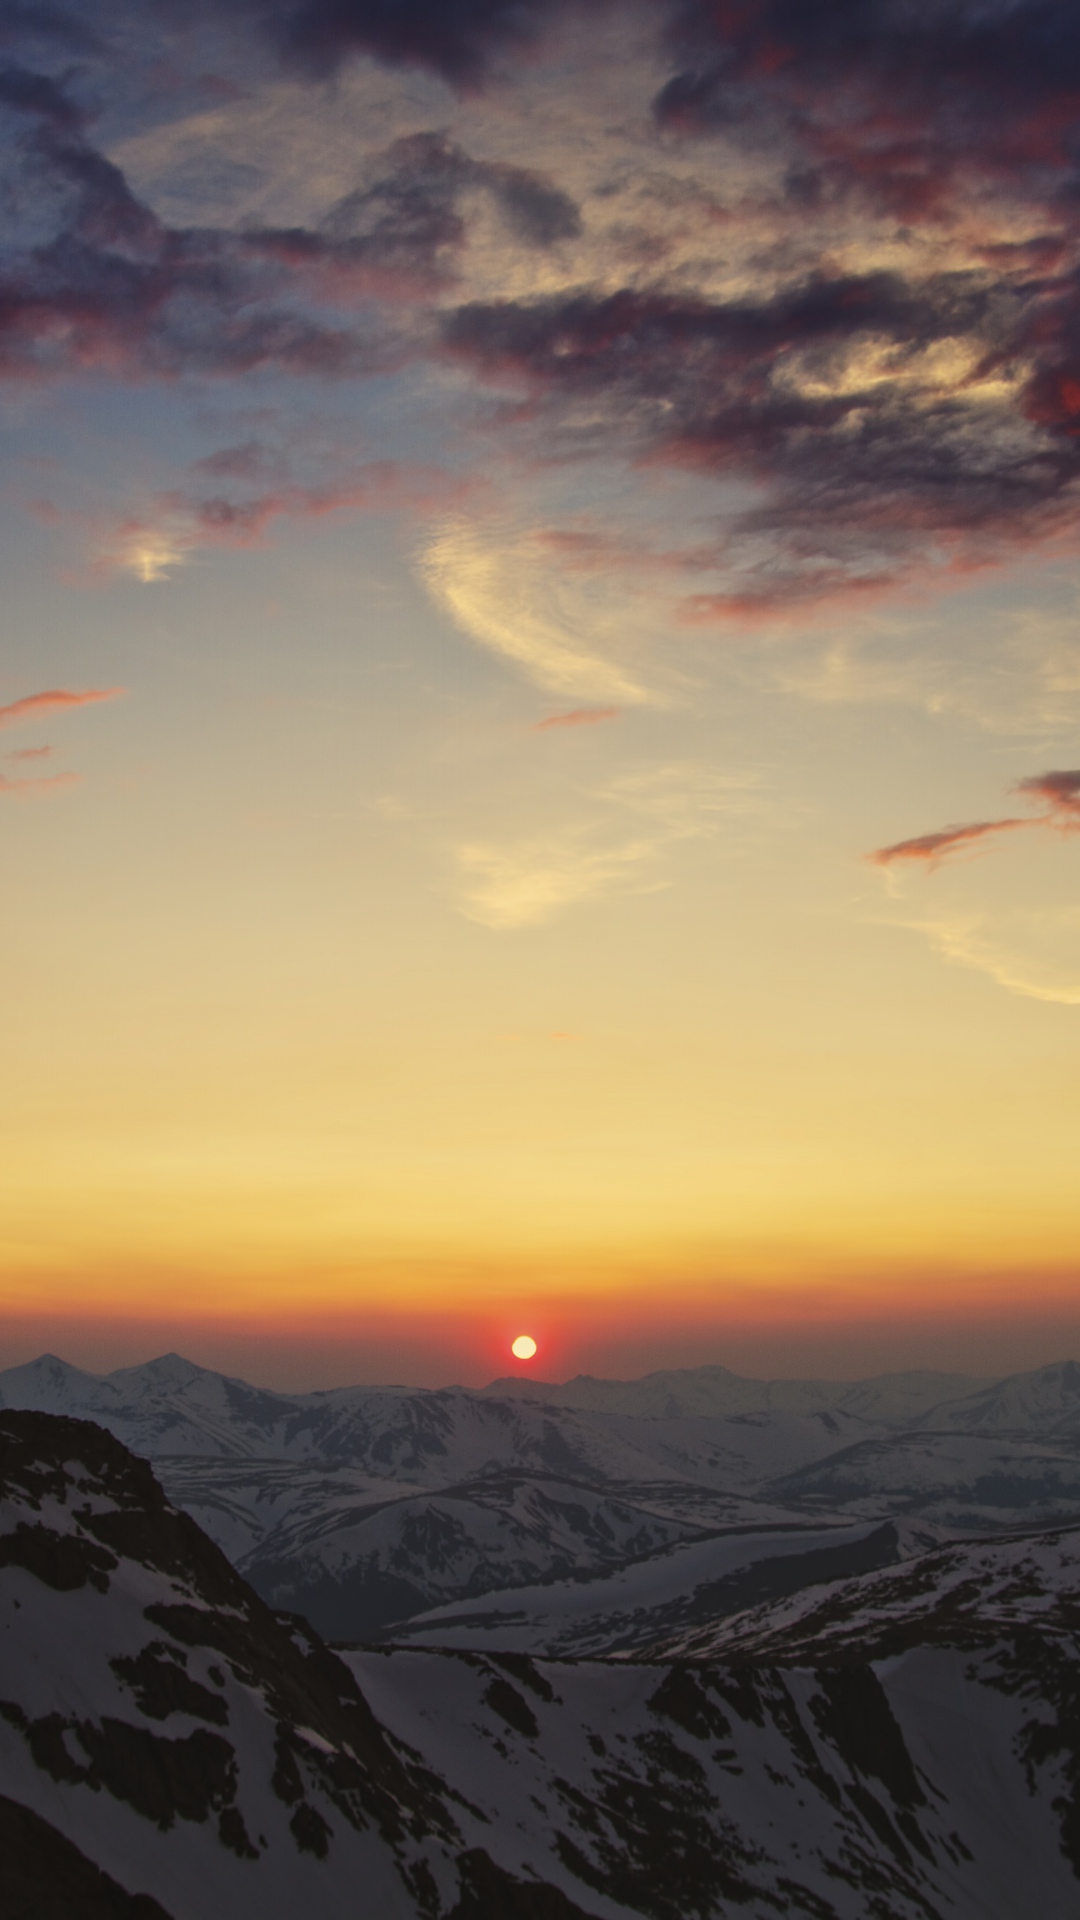 Mountains-Cordillera-Sky-Sunset-Sun-Clouds-iPhone-6-wallpaper.